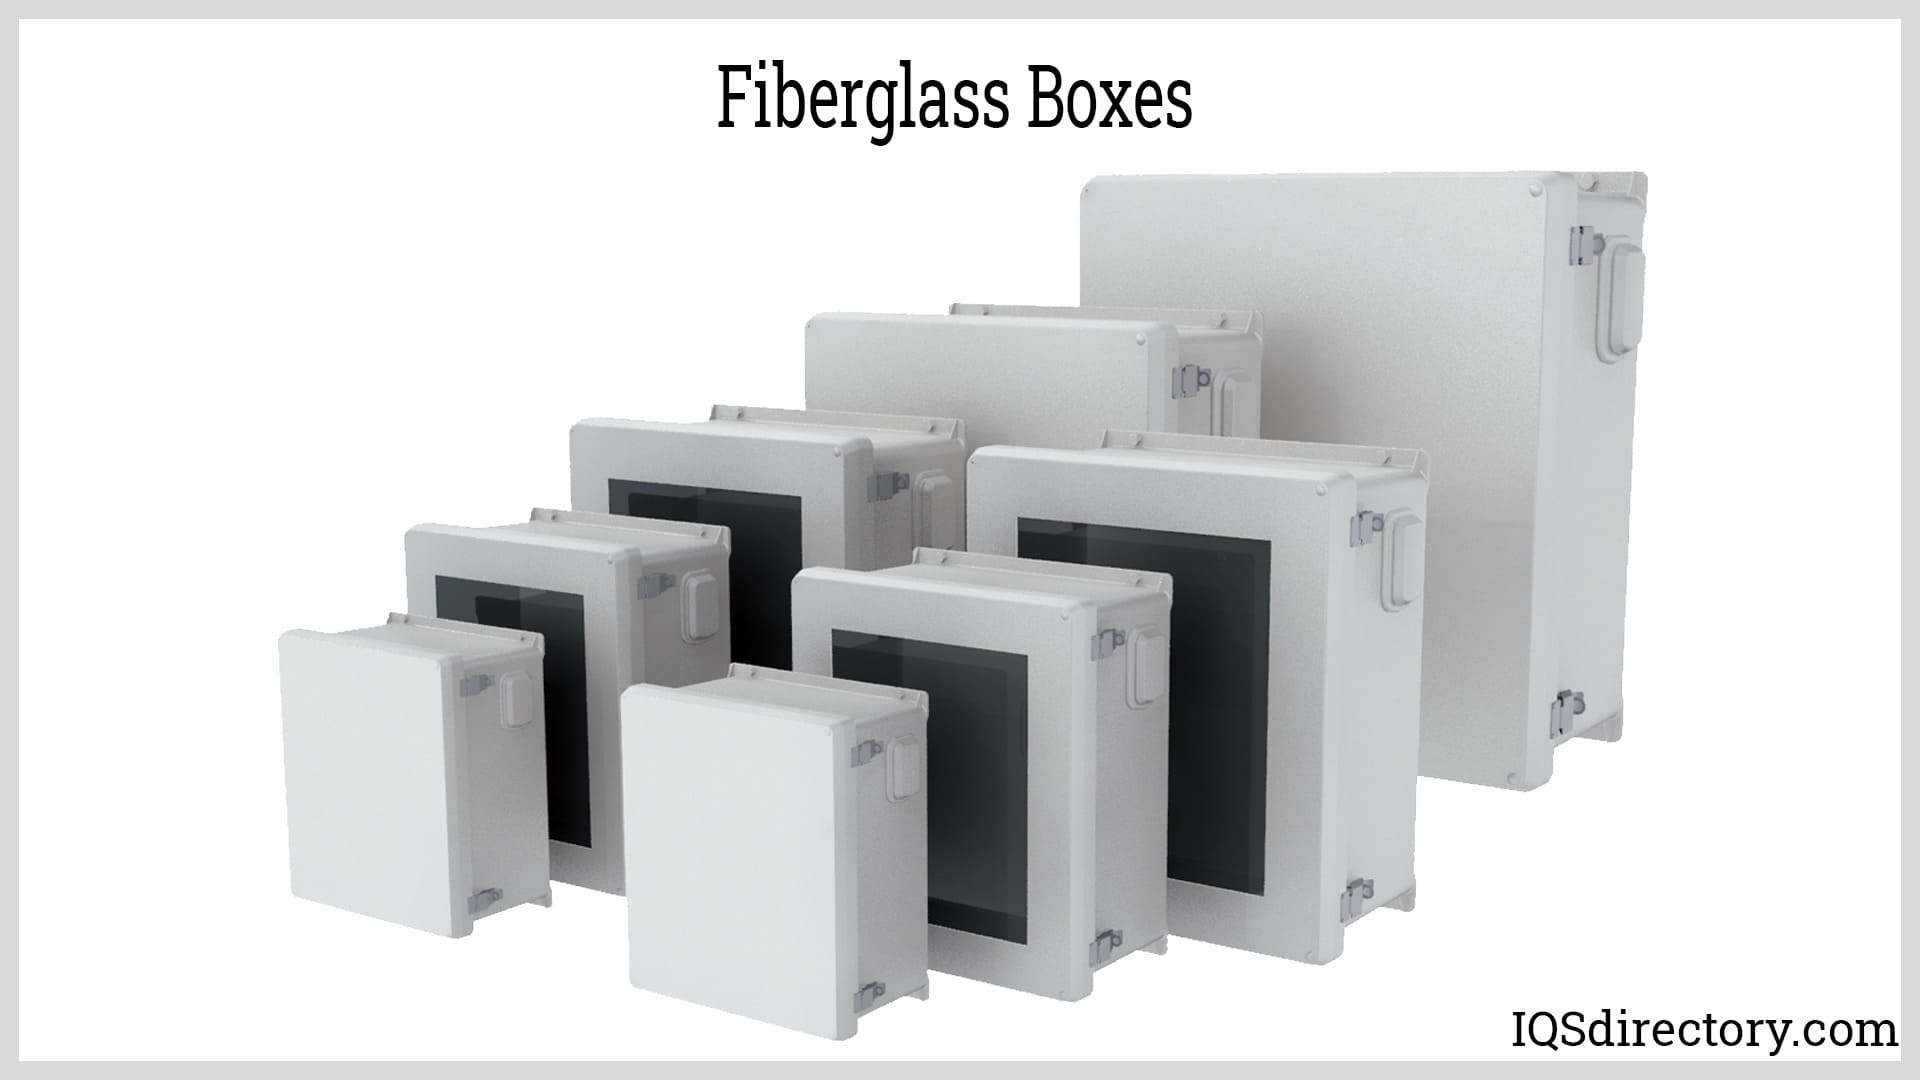 Fiberglass Boxes